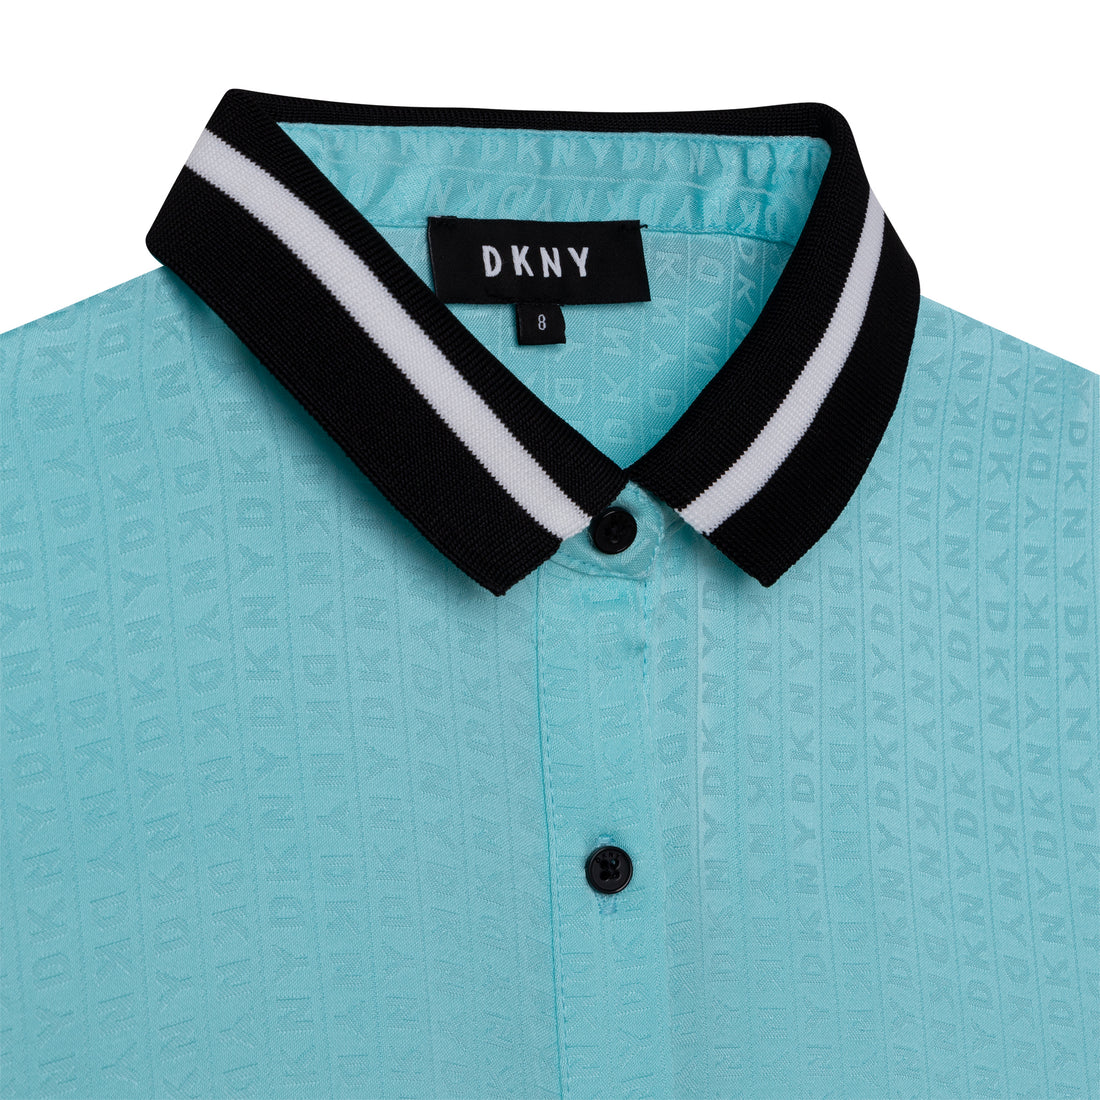 Dkny Short Sleeved Dress Style: D32822